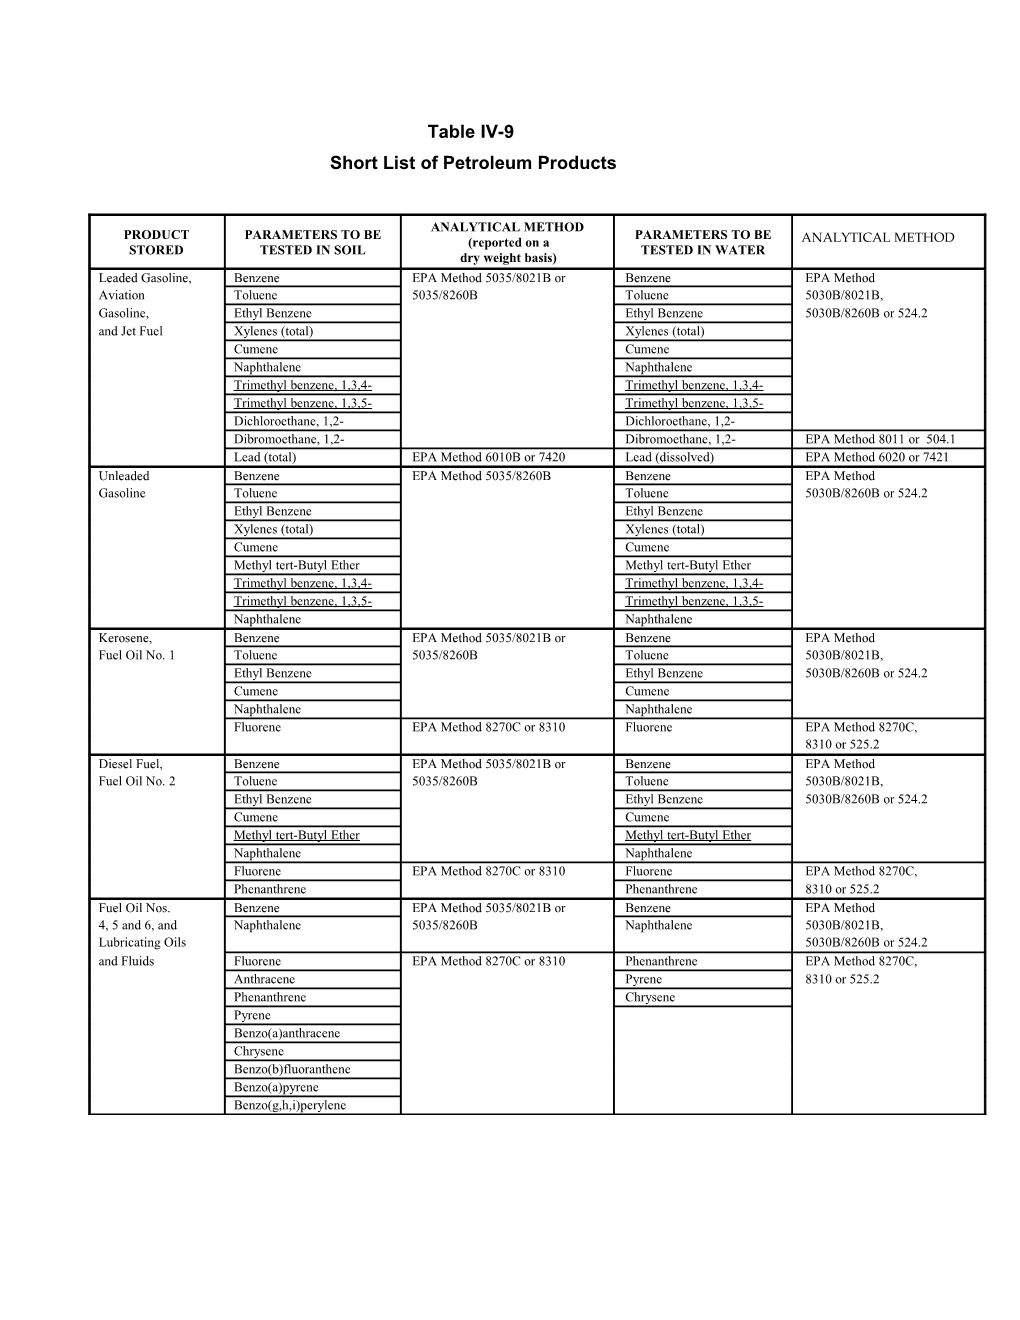 Short List of Petroleum Products